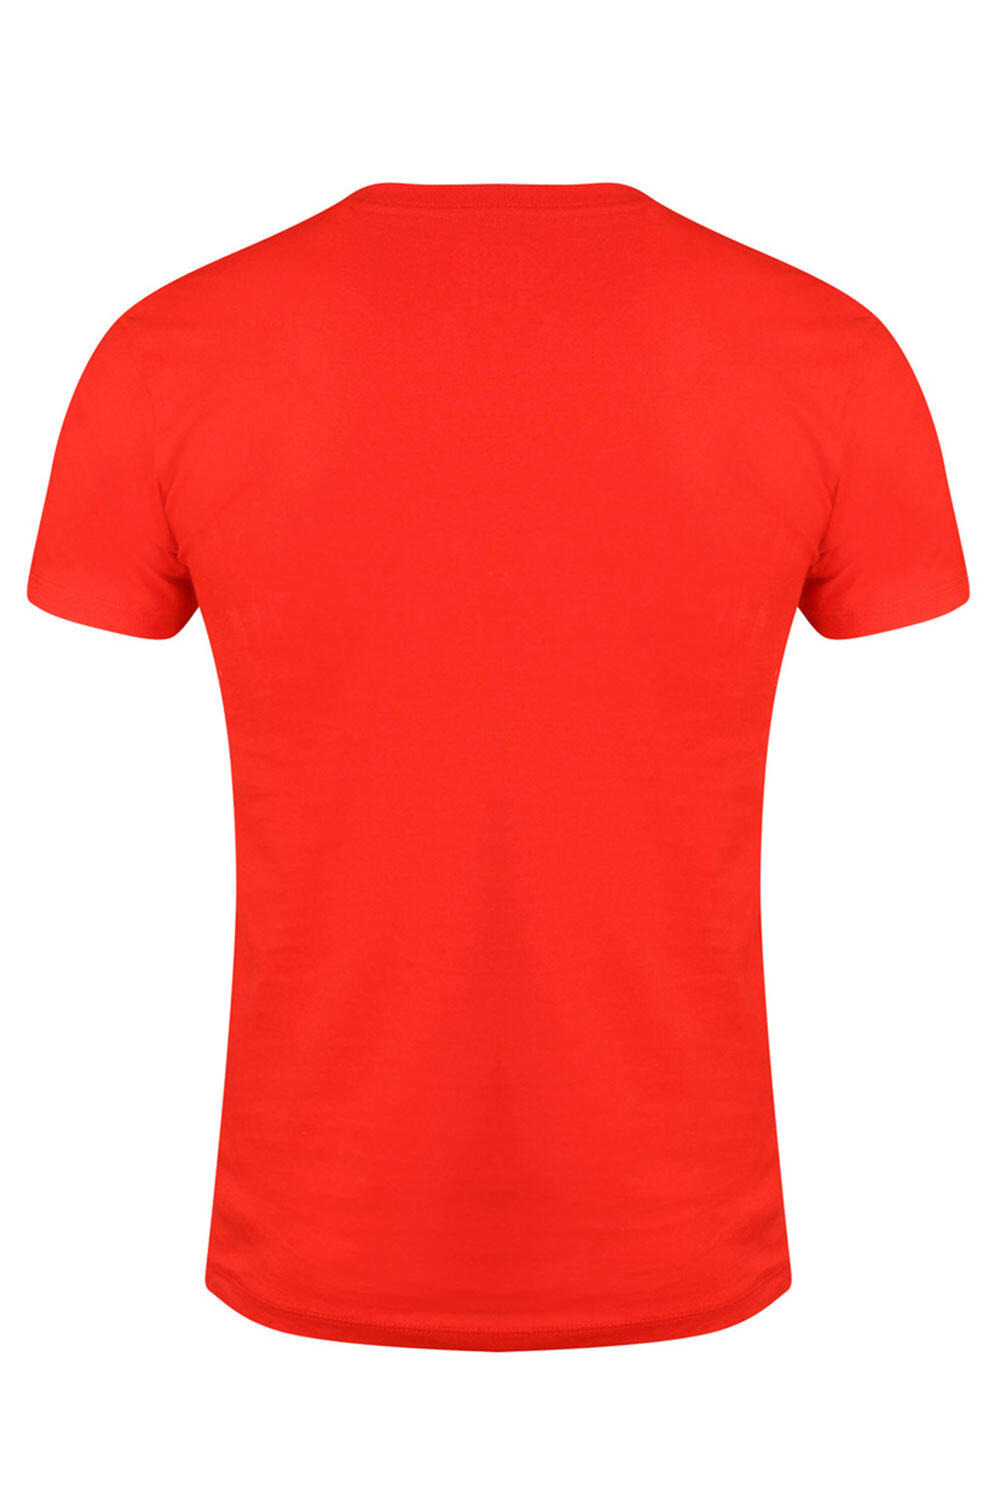 Men's Gold's Gym Muscle Joe Print T-Shirt 3/4